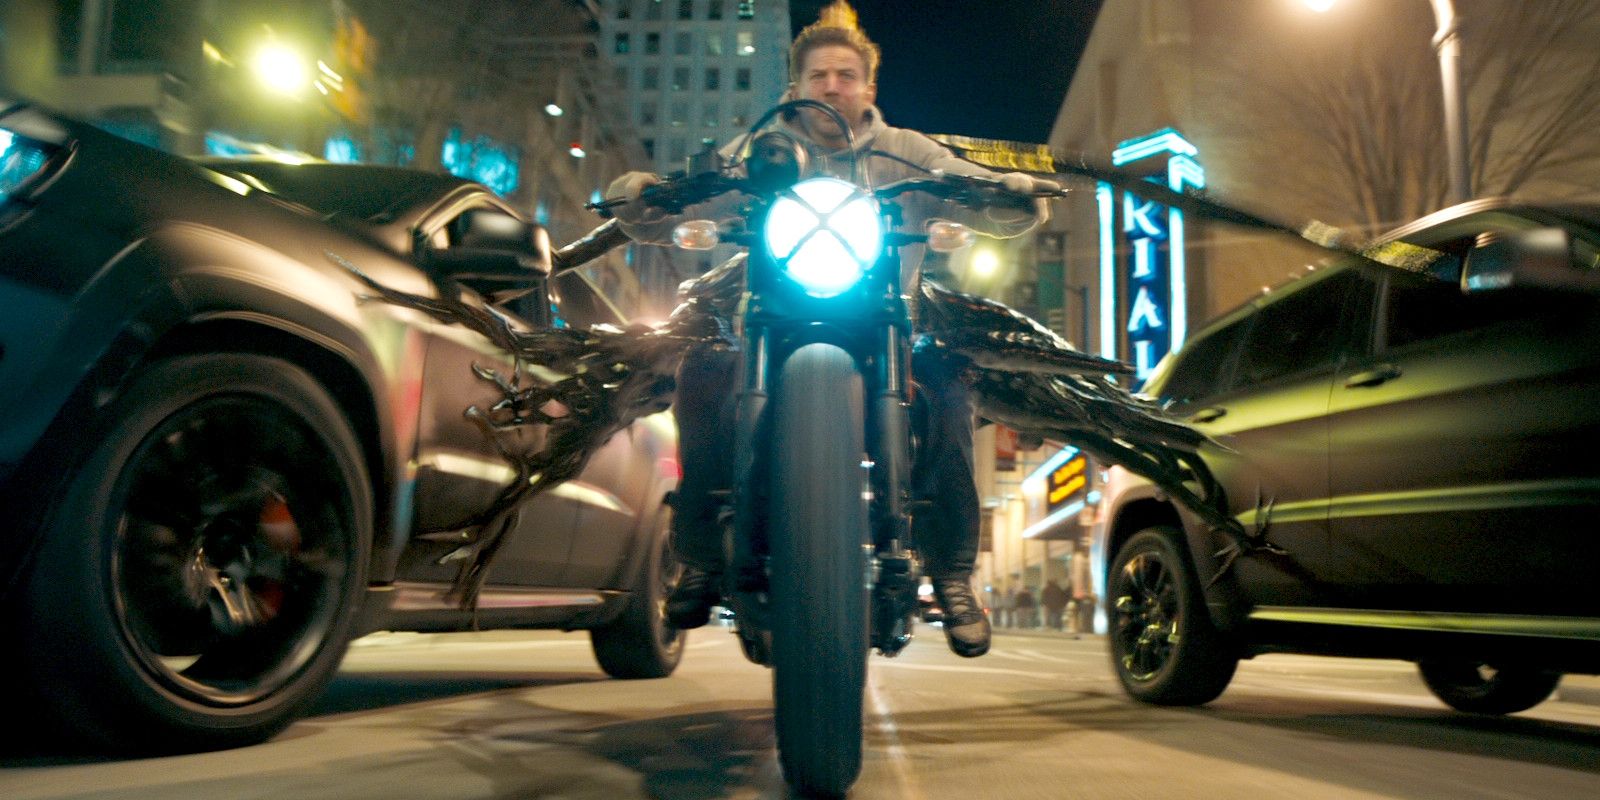 Venom extends his black webbing while Eddie Brock rides a motorcycle in the 2018 film